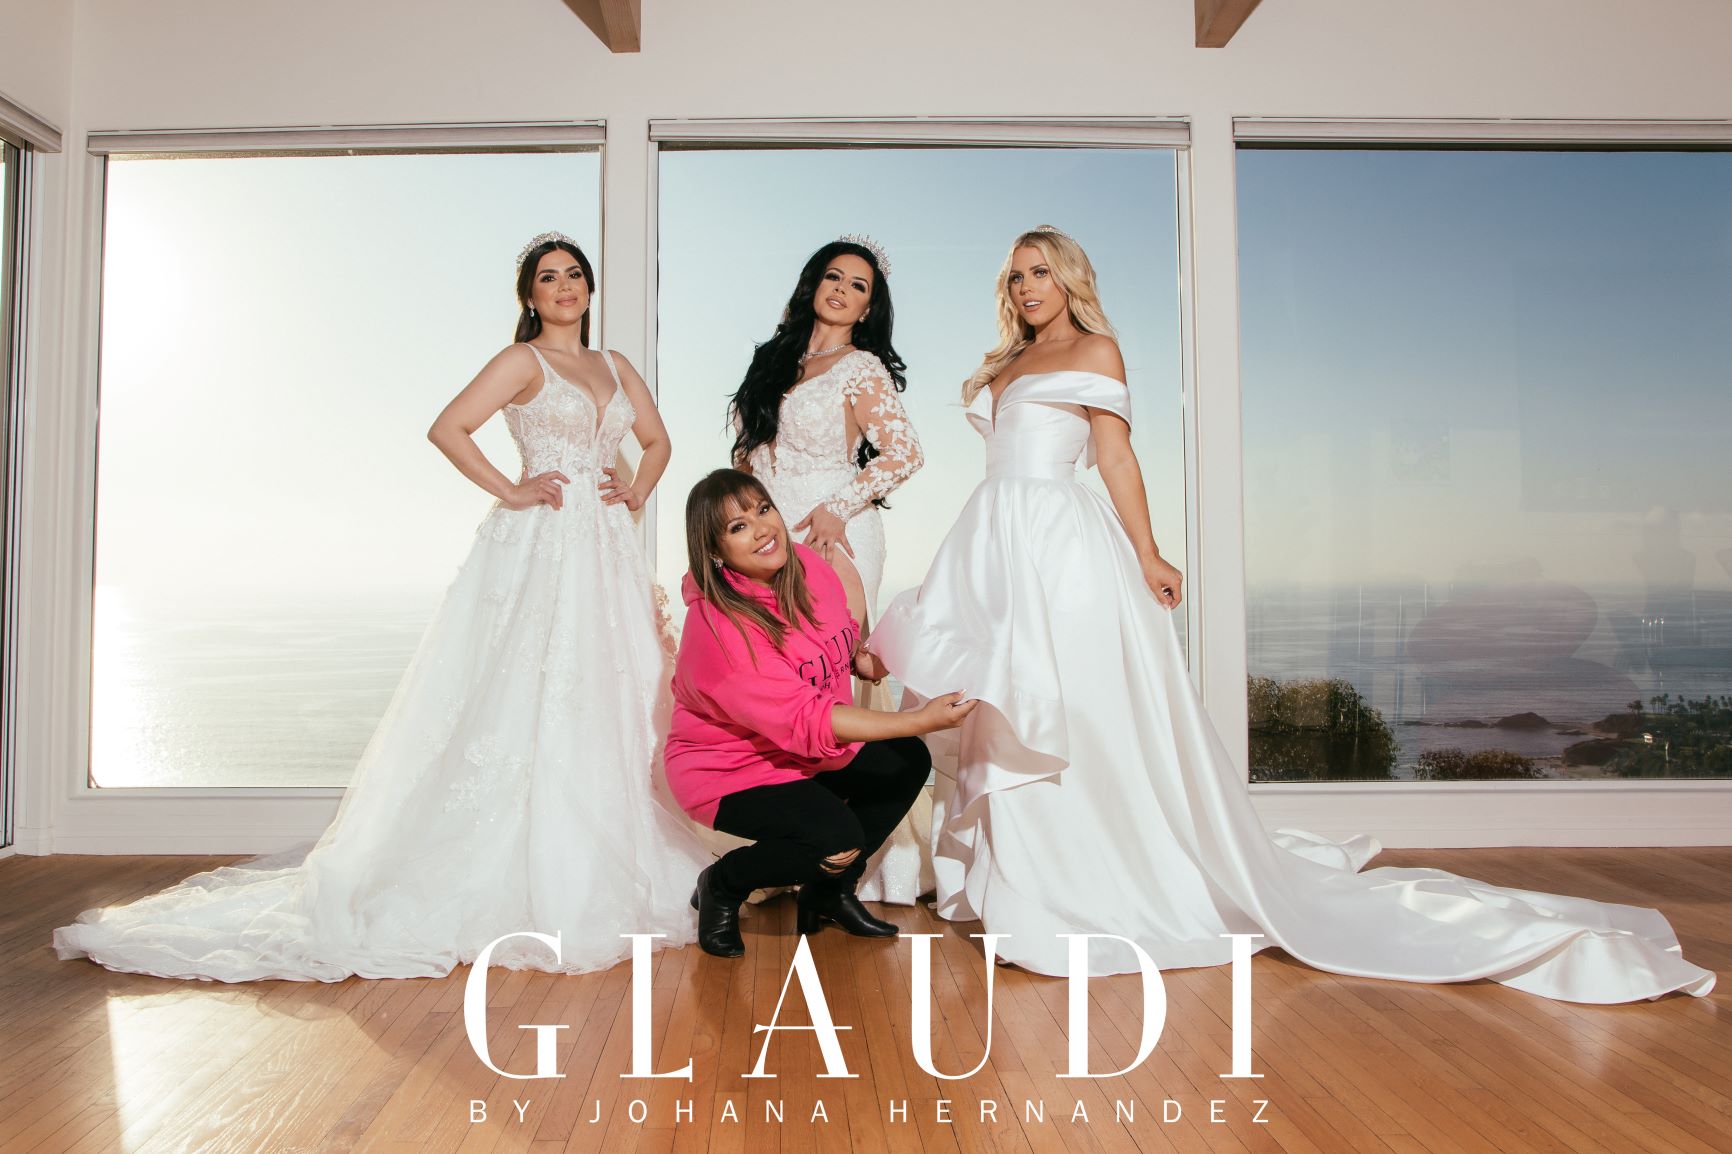 Designer Johana Hernandez poses with three models wear her bridal designs